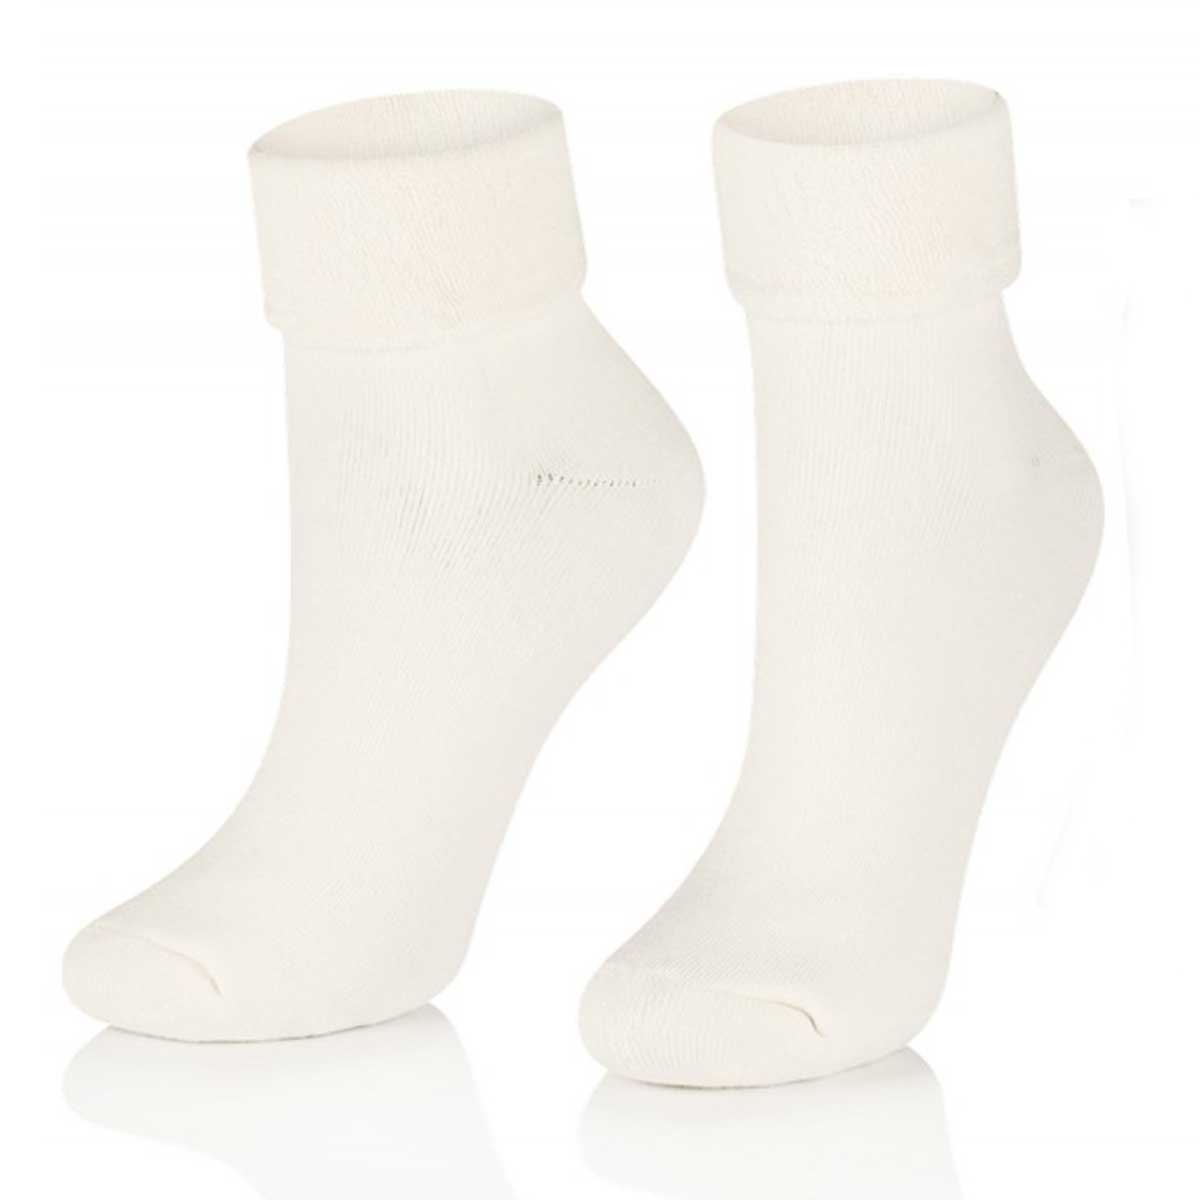 Soft cozy socks with plush terry inside • women's socks